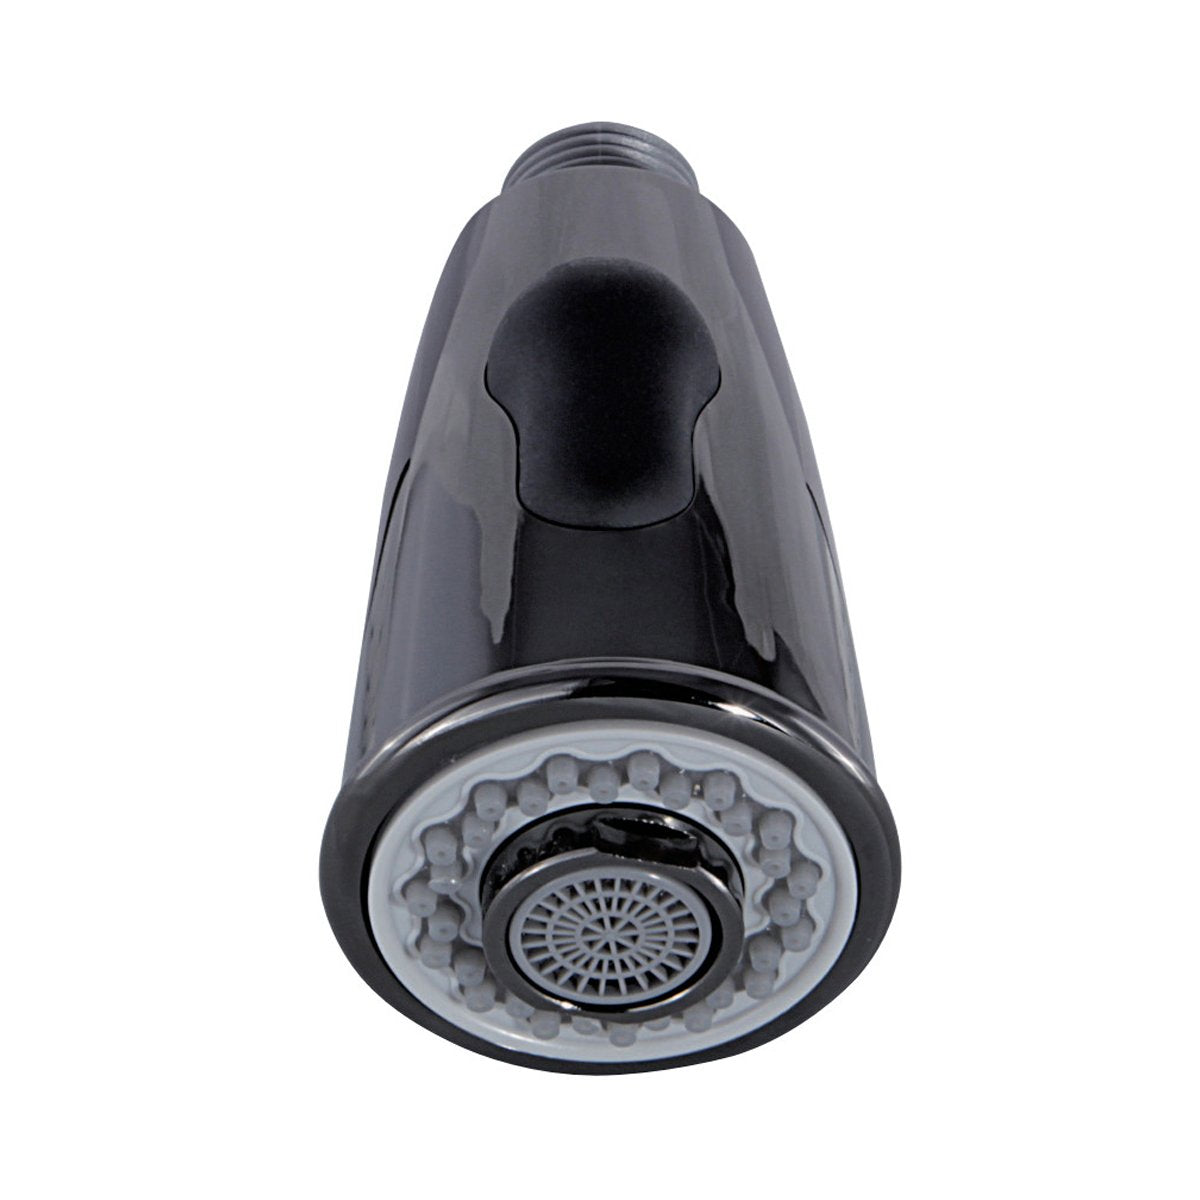 Kingston Brass 2-Function Pull-Down Kitchen Faucet Sprayer in Black Stainless Steel